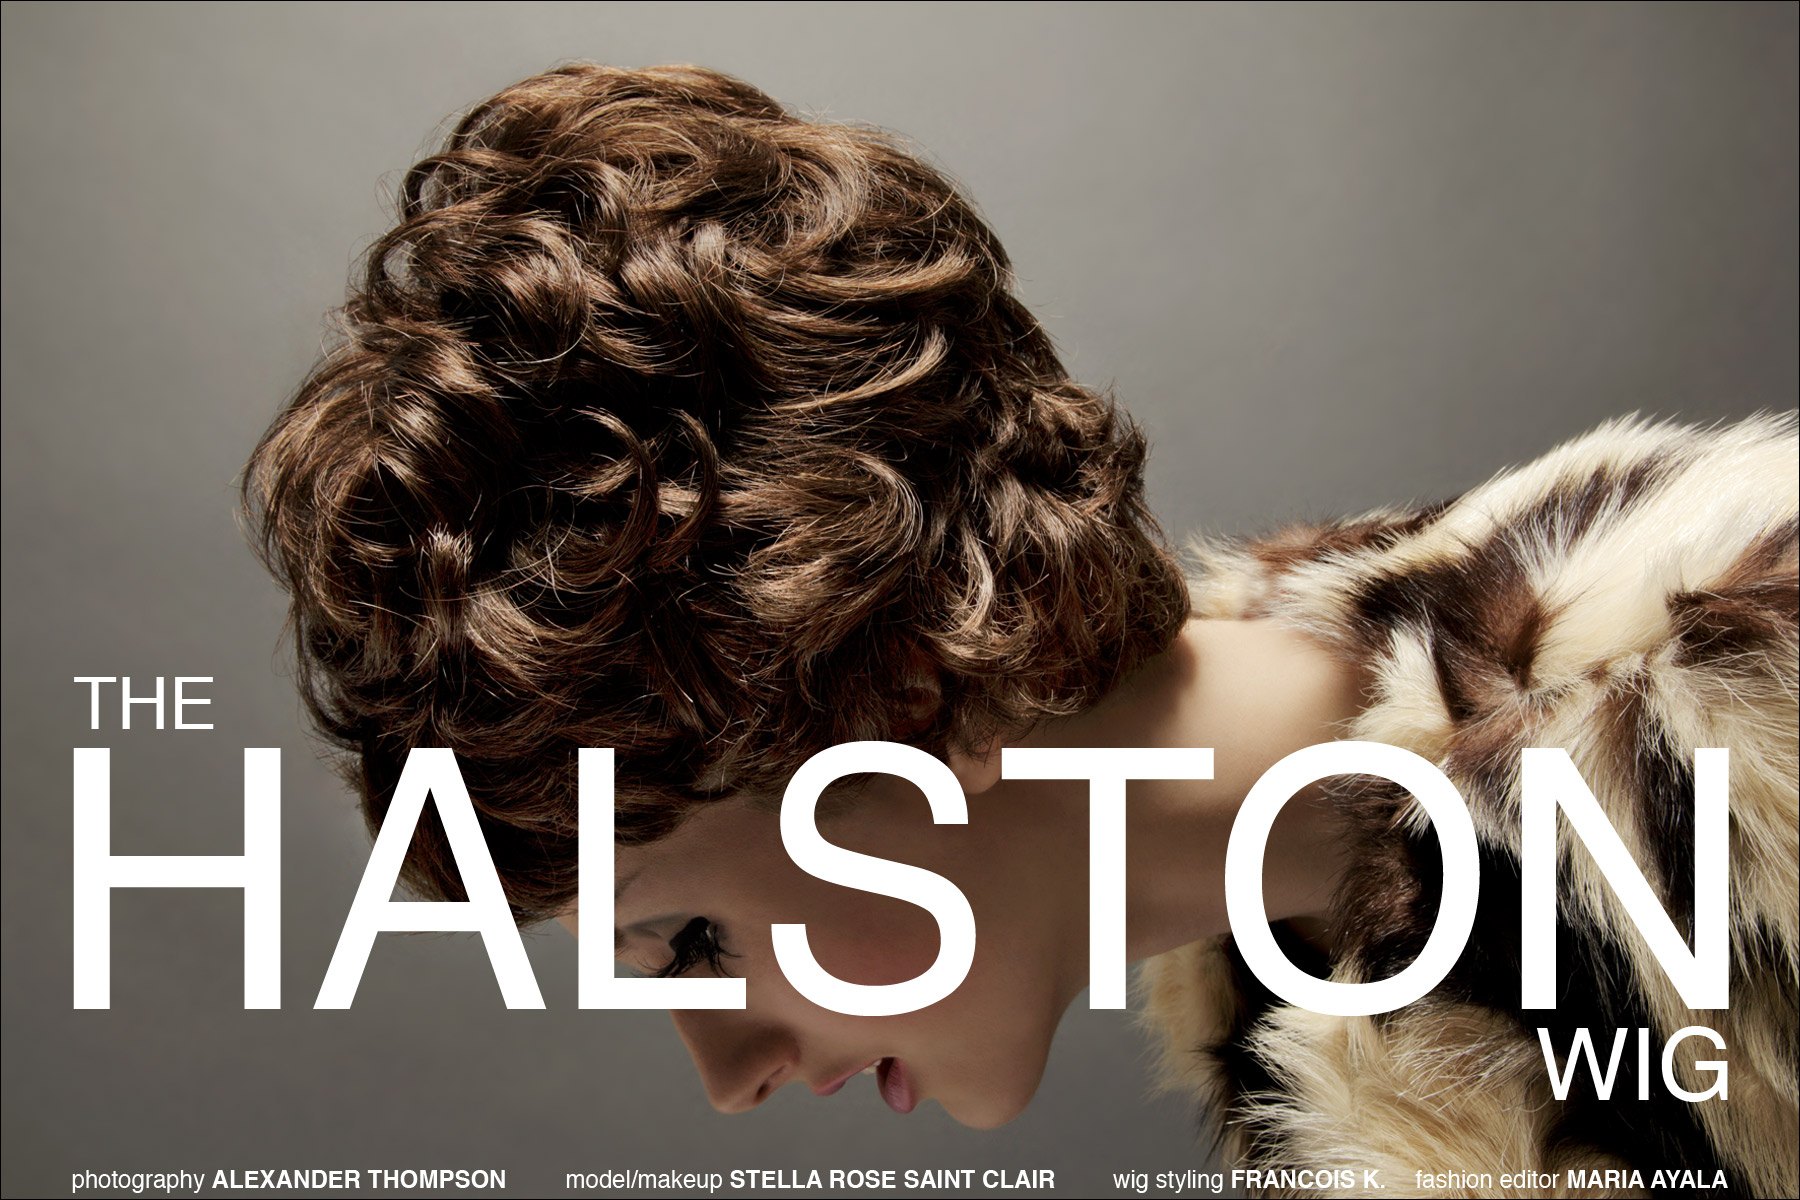 Stella Rose Saint Clair stars in Ponyboy Magazine women's editorial "The Halston Wig". Photography by Alexander Thompson.